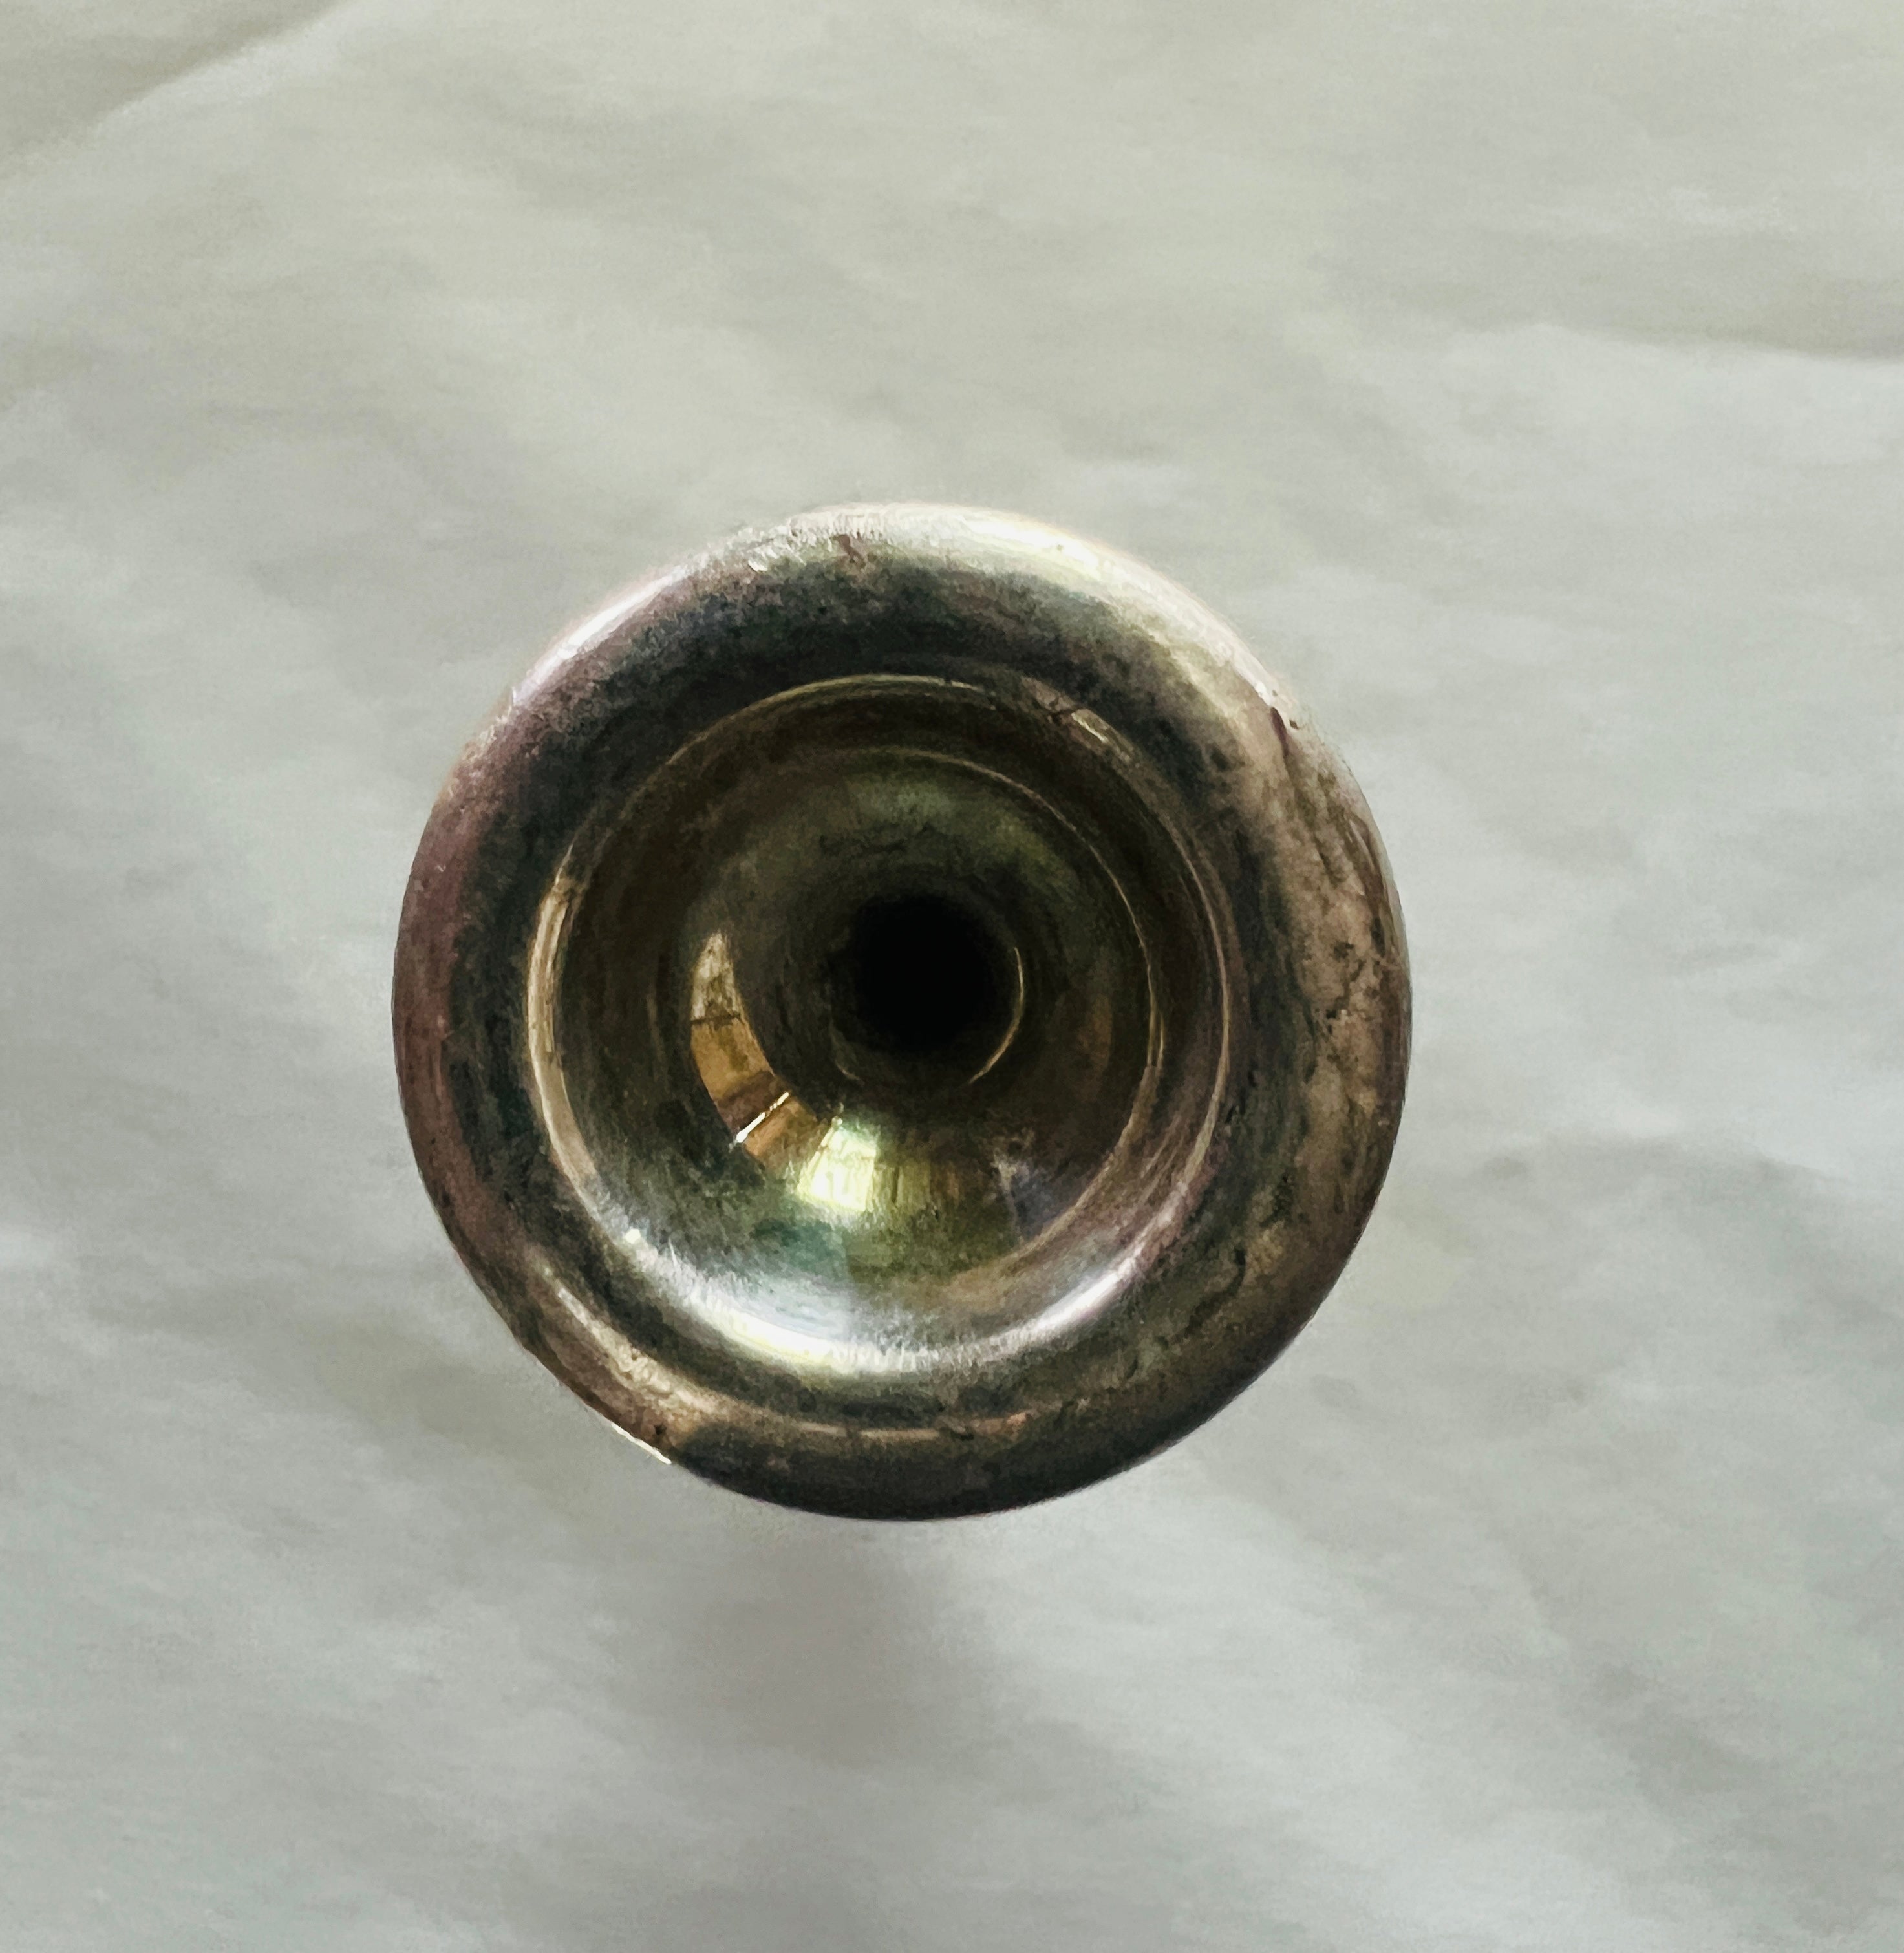 Schilke 14A4A Trumpet Mouthpiece Chicago, Illinois USA NEW Old Stock